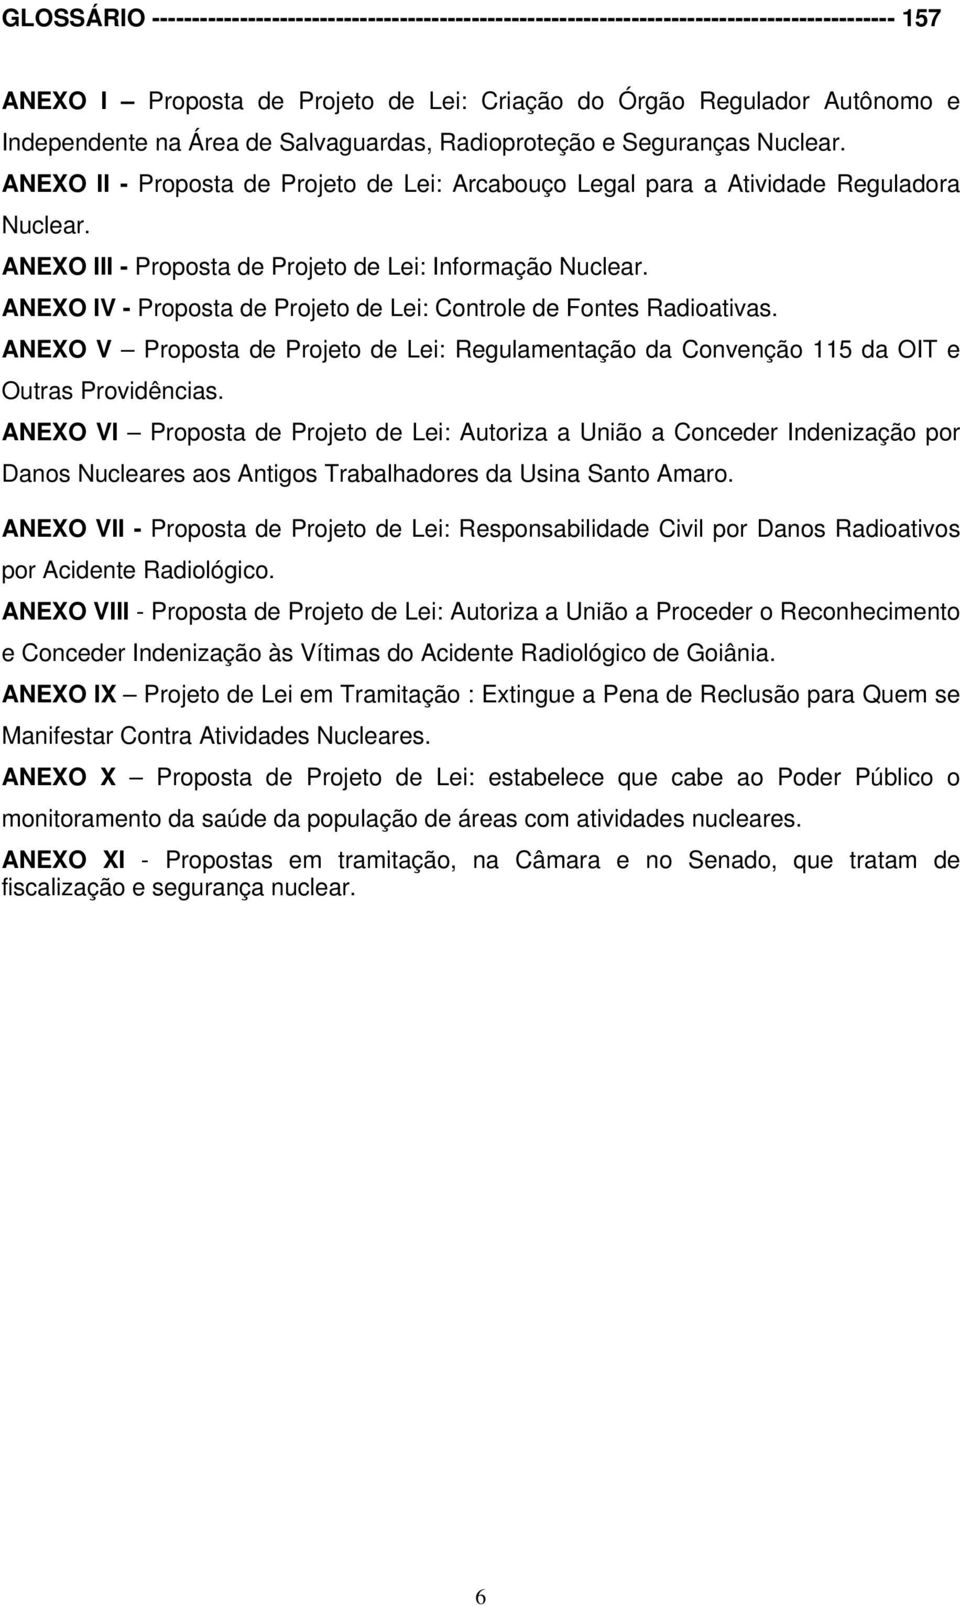 ANEXO III - Proposta de Projeto de Lei: Informação Nuclear. ANEXO IV - Proposta de Projeto de Lei: Controle de Fontes Radioativas.